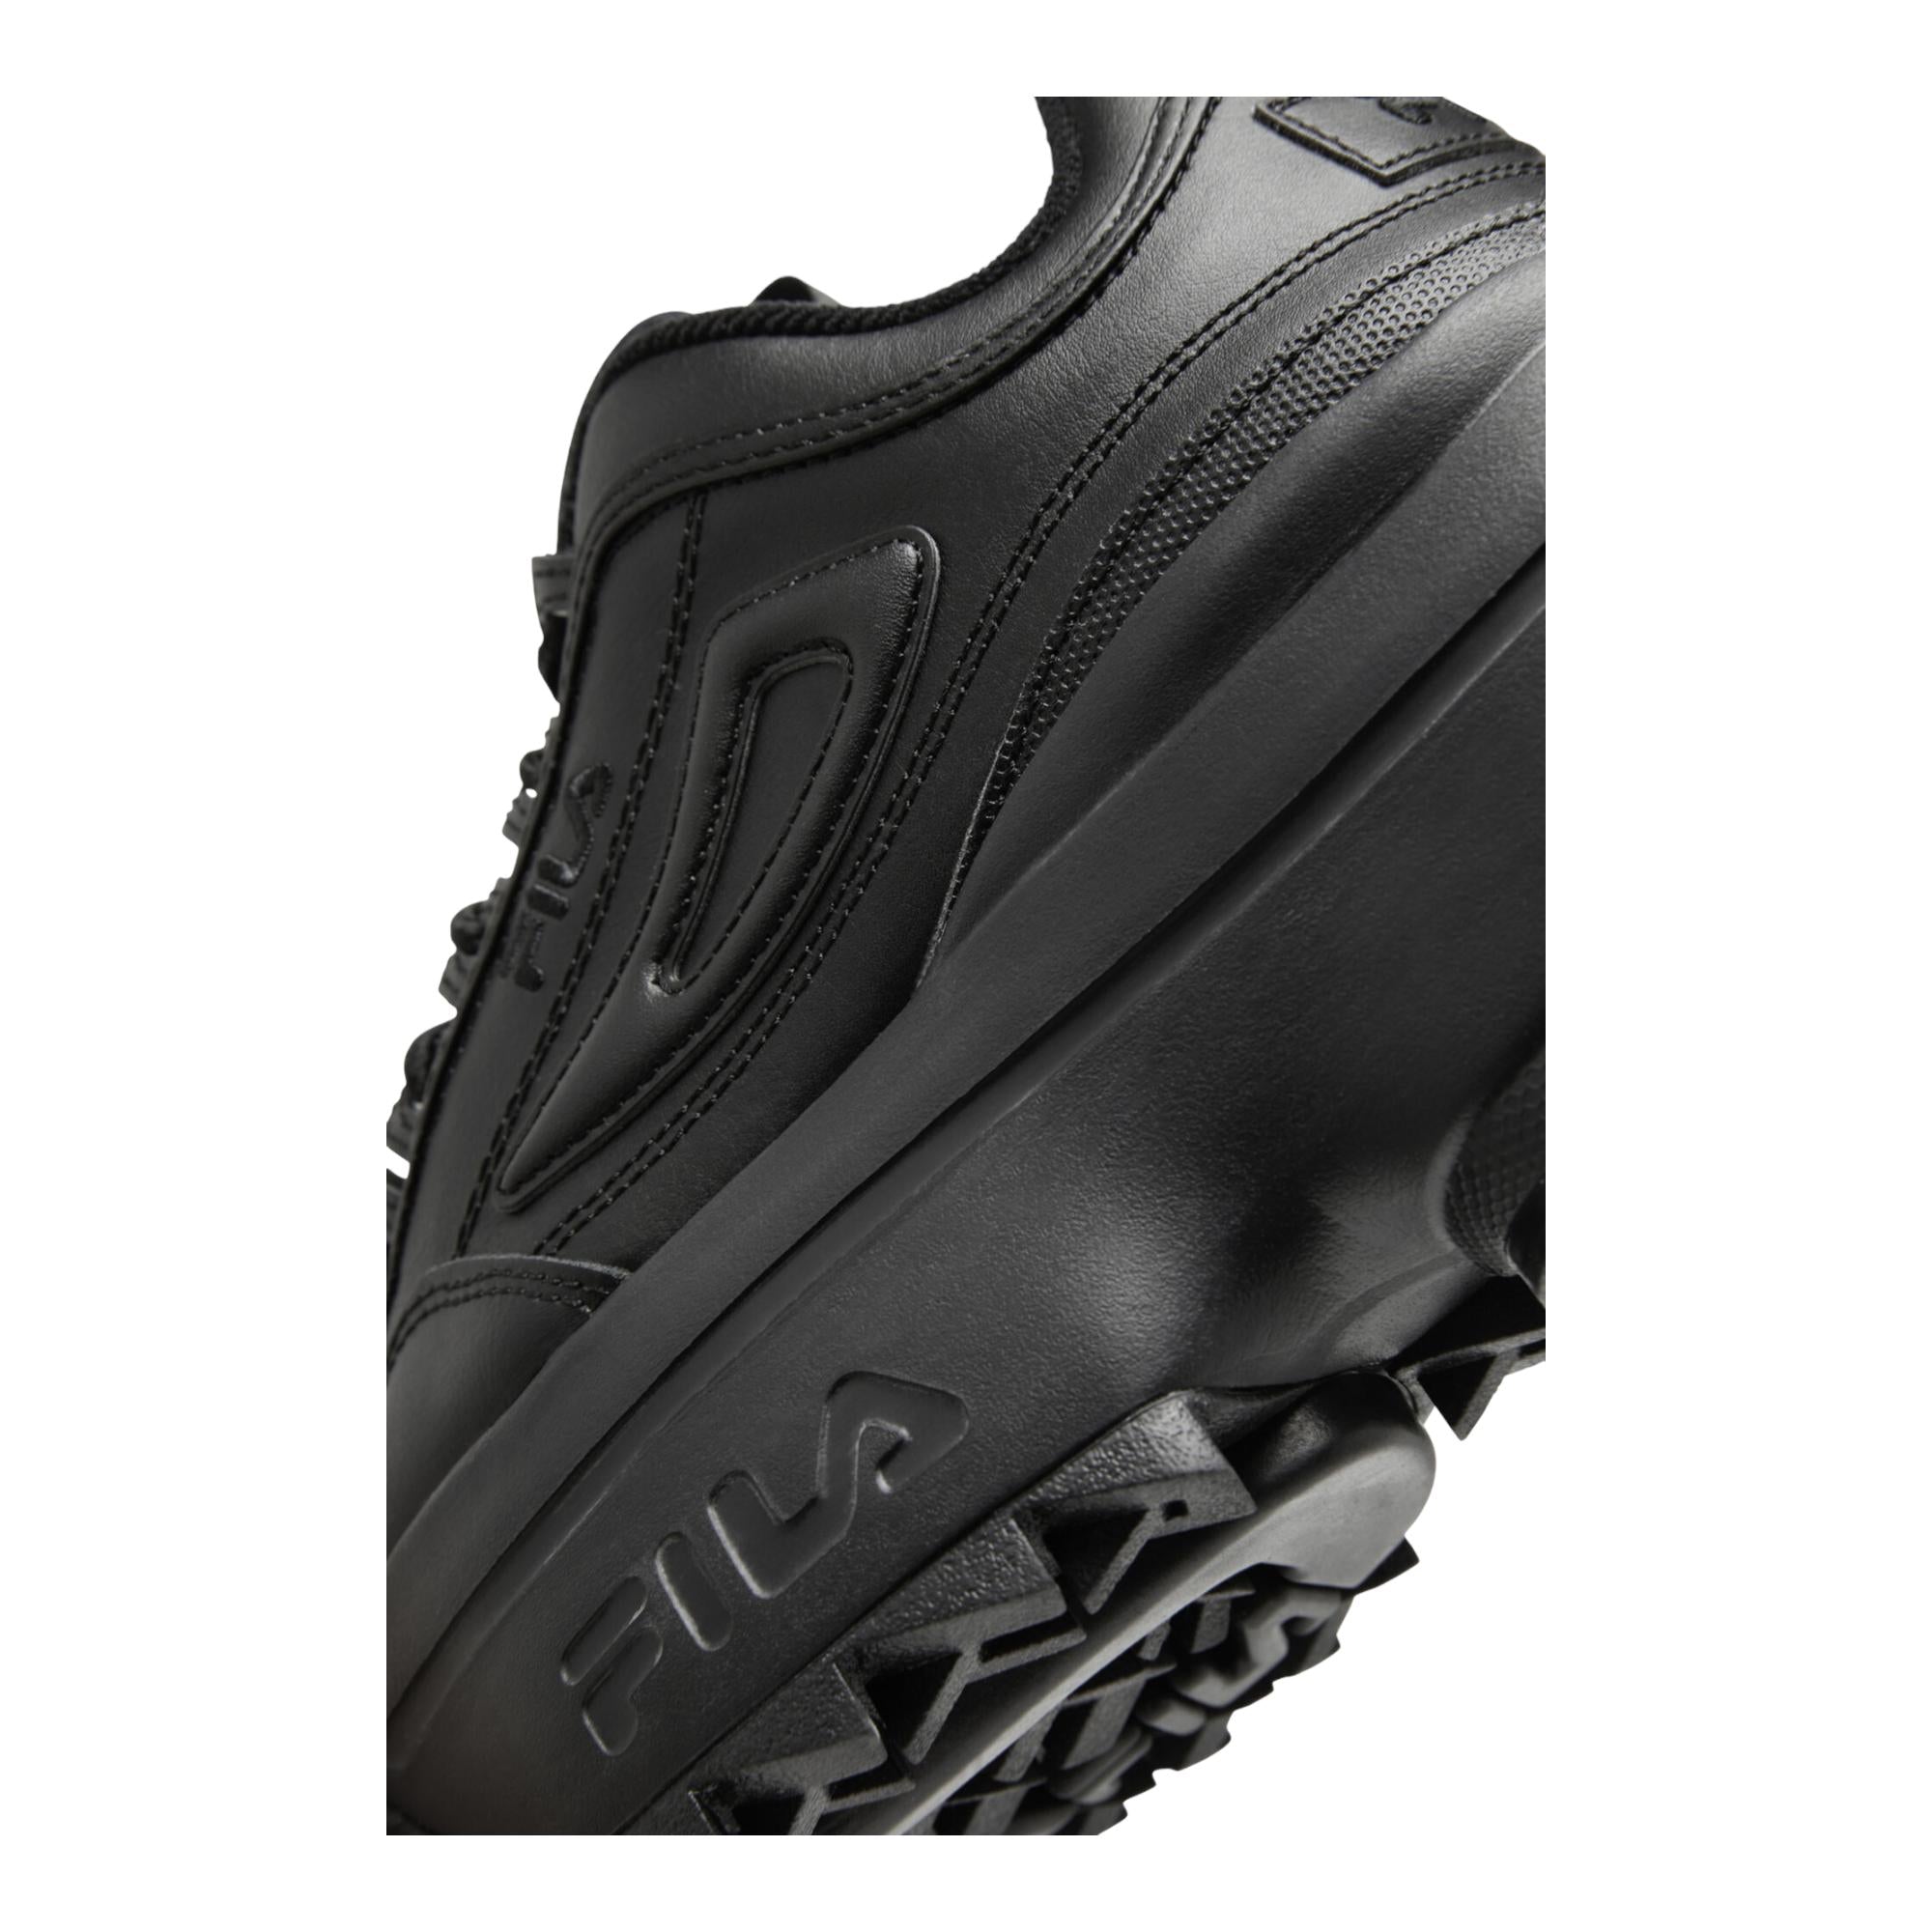 FILA Disruptor 2 Wedge Shoes Sneaker Black Unisex F042530 US Size 6.5 - 8.0